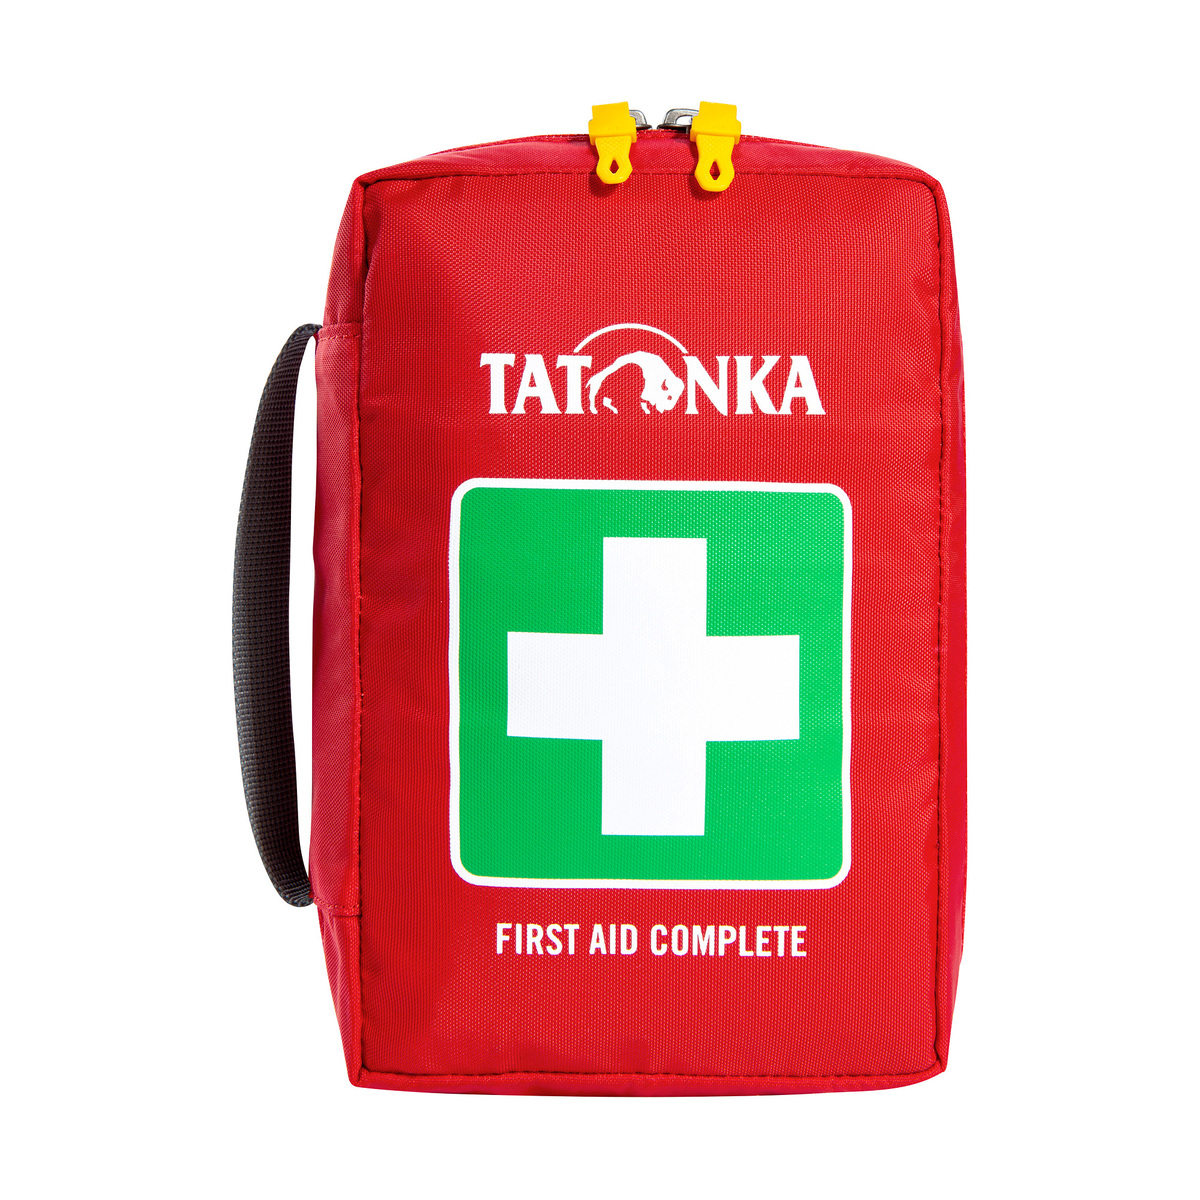  Tatonka First Aid Complete